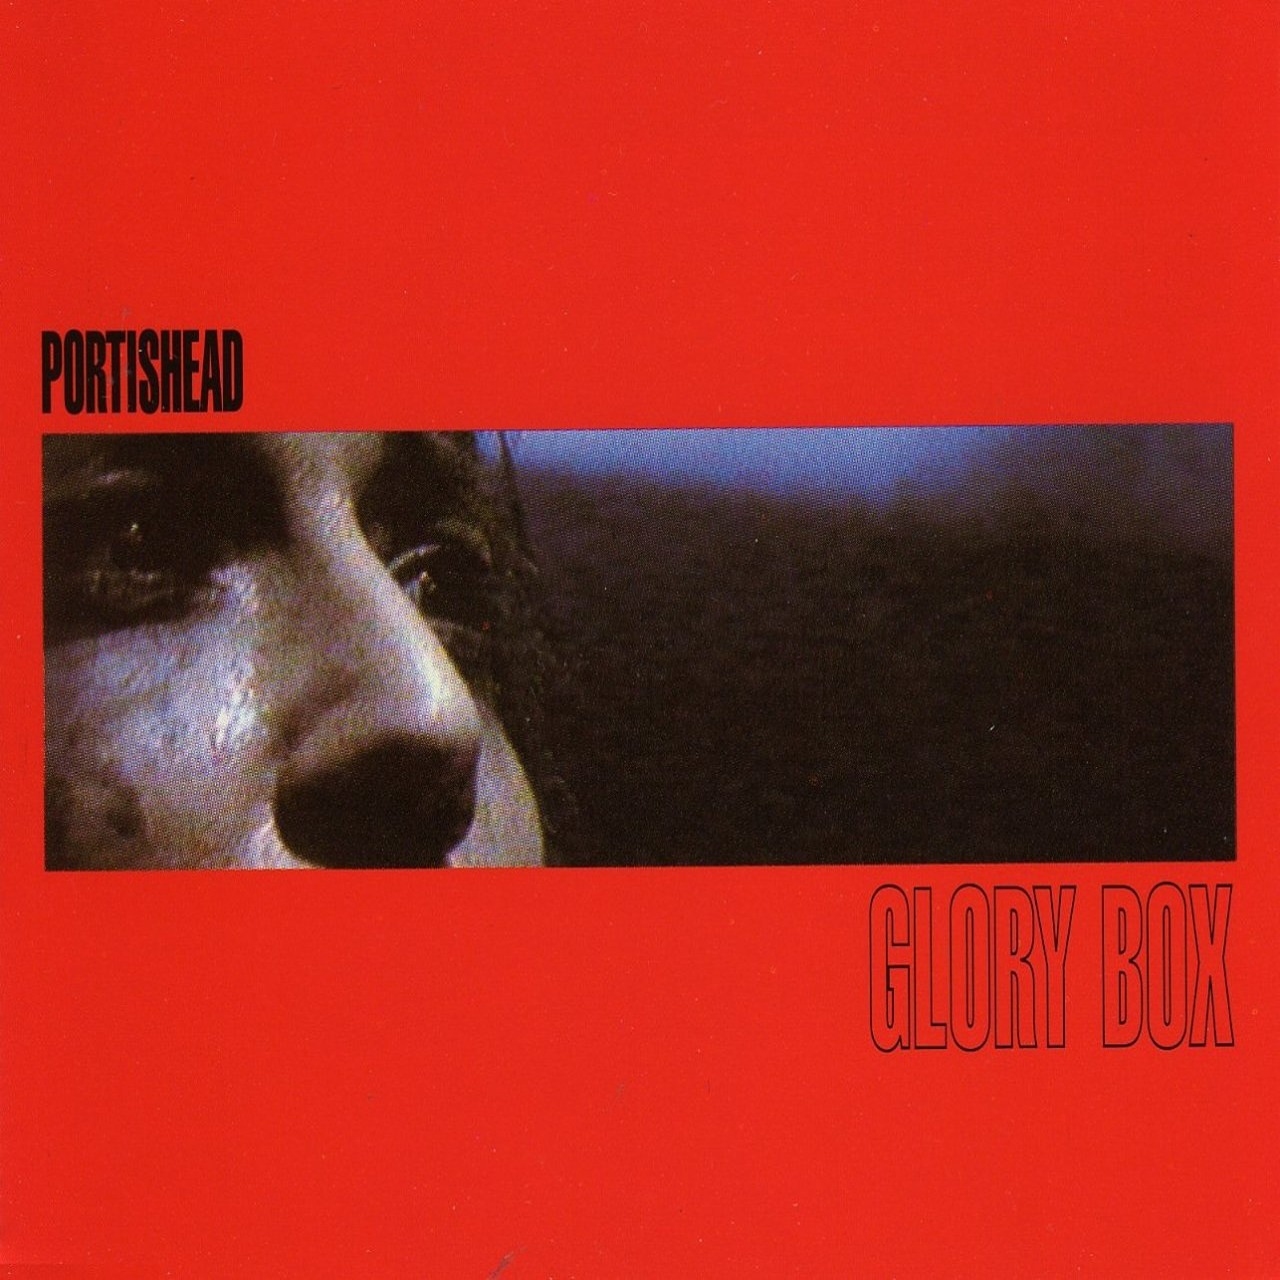 Portishead Glory Box cover artwork